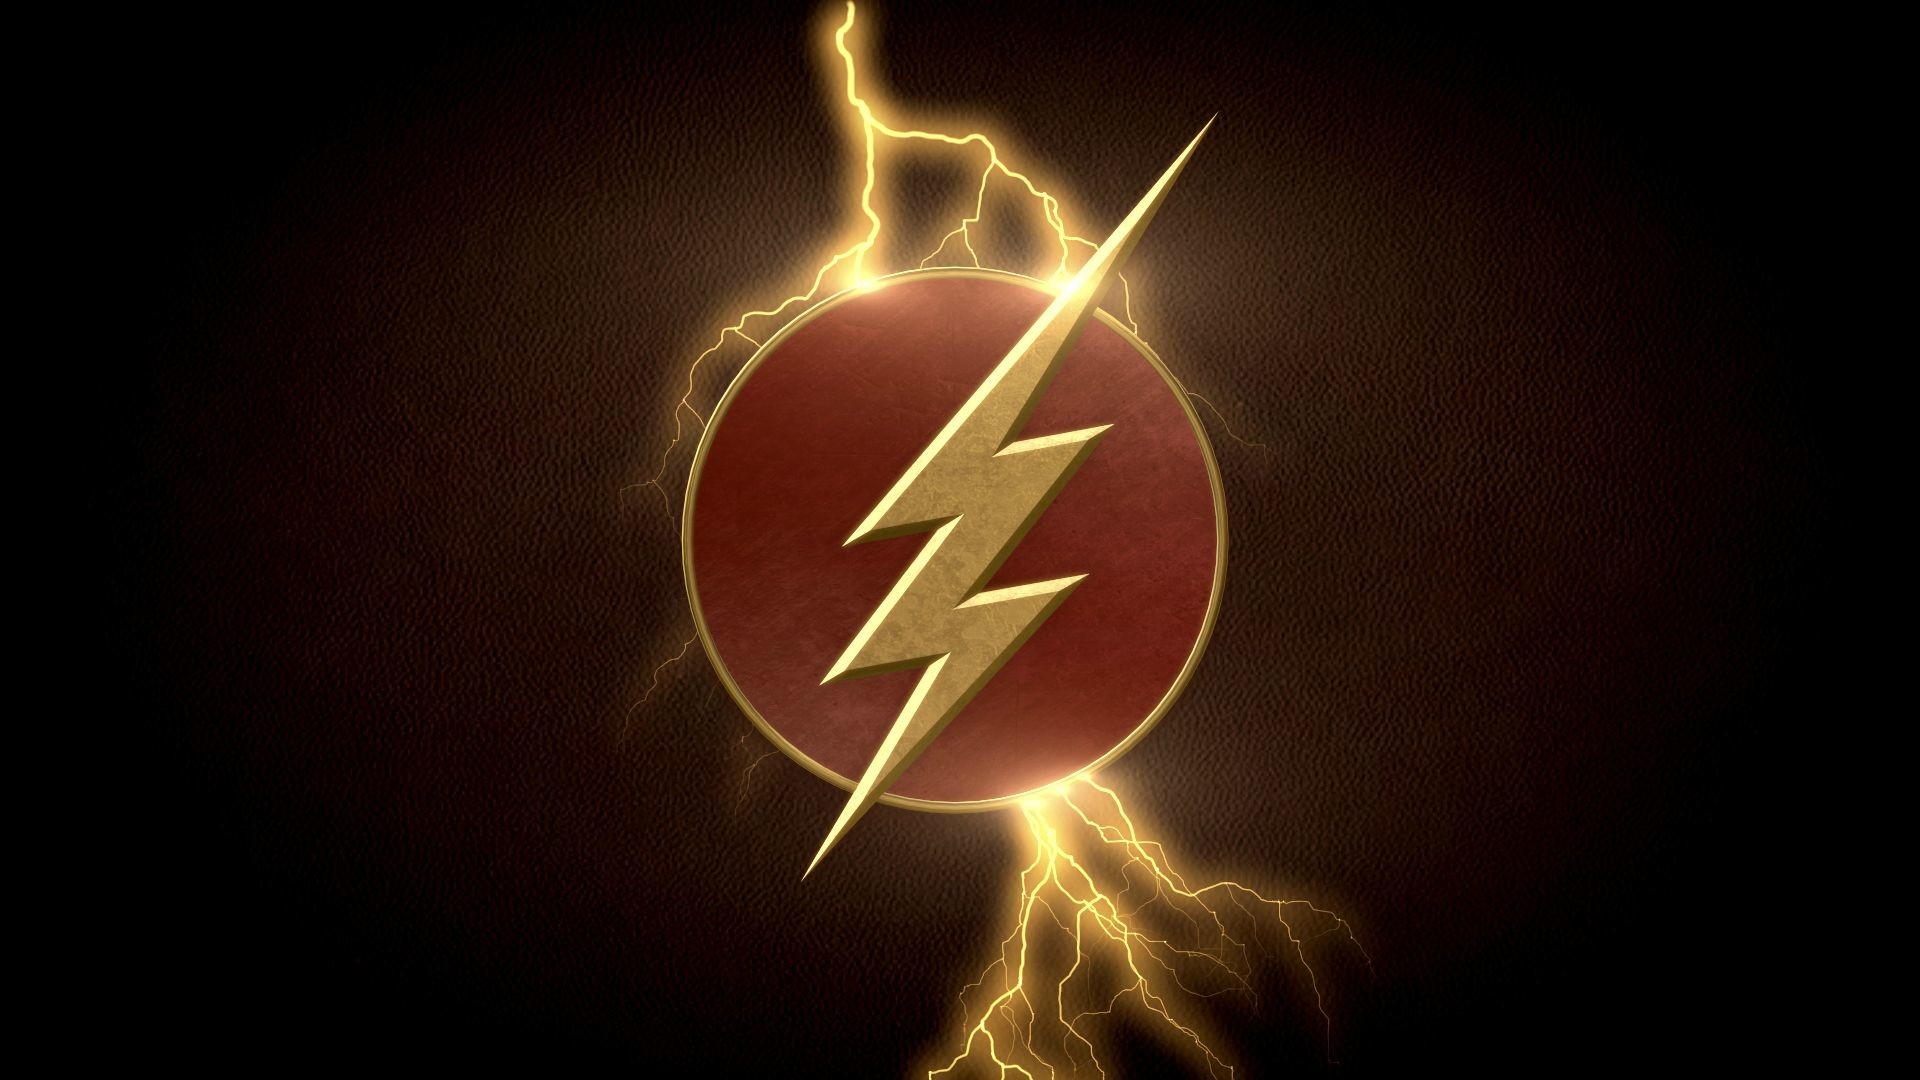 User BigRockDJ posted an awesome Flash logo wallpaper to r / DCcomics